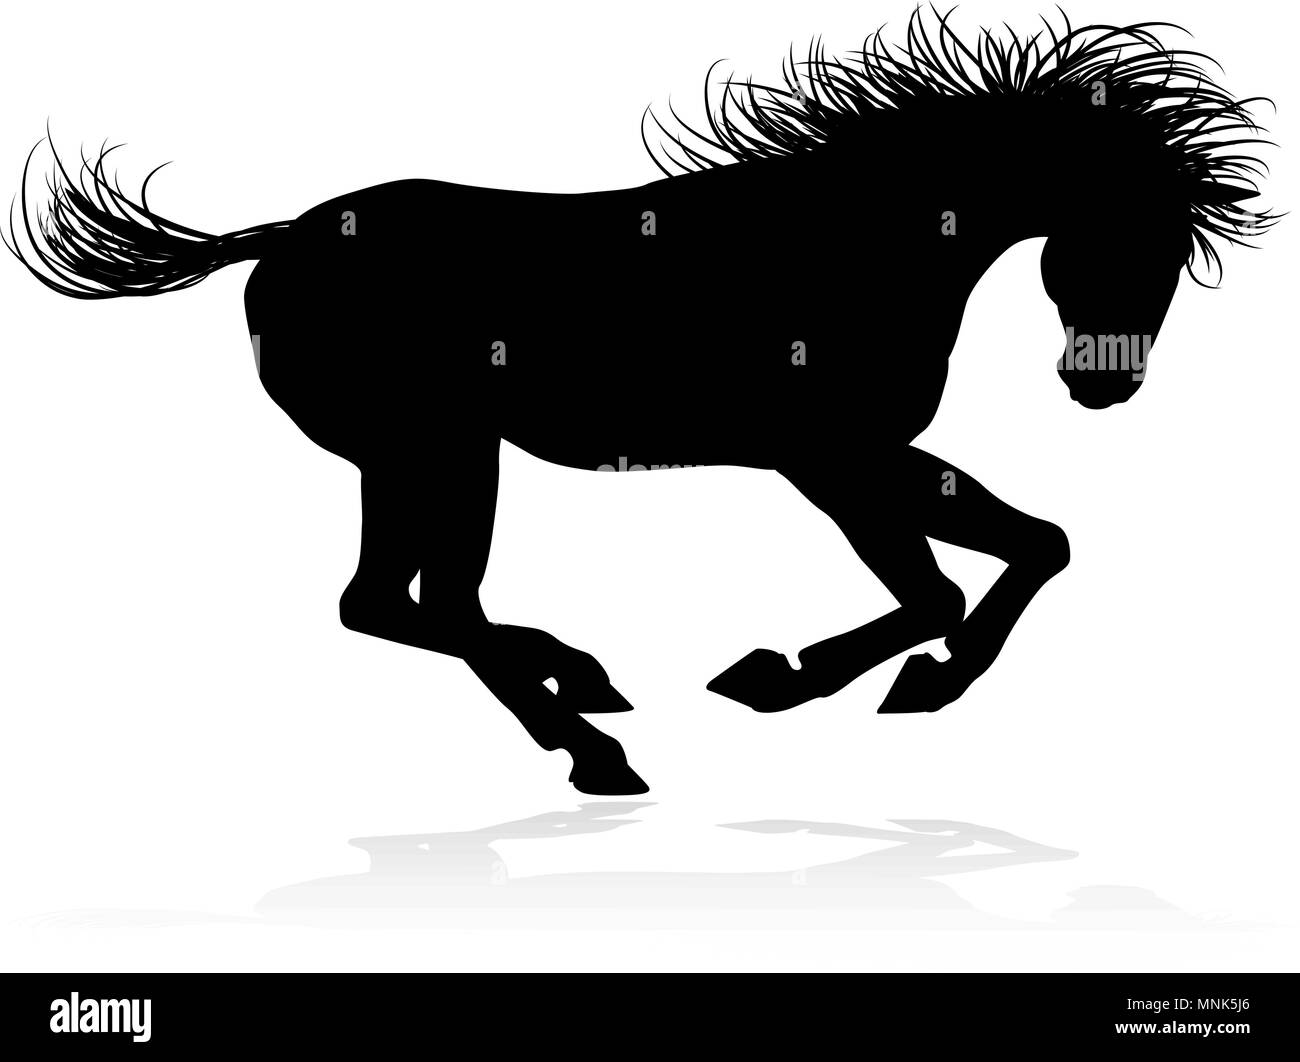 Horse Animal Silhouette Stock Vector